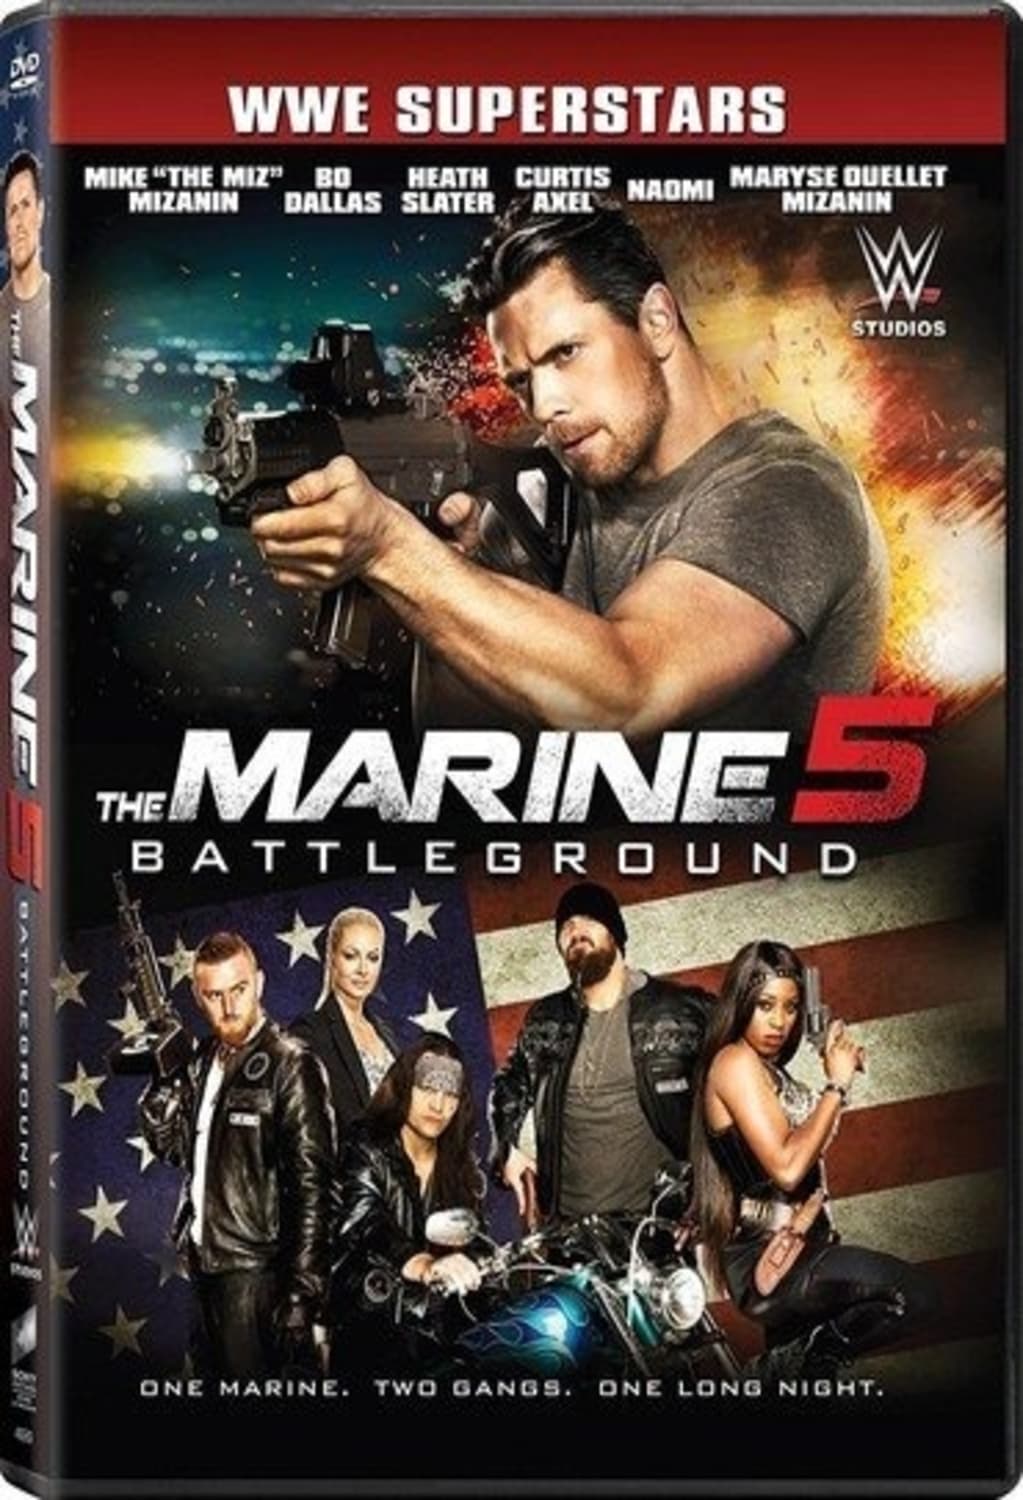 The Marine 5 – Battleground (DVD) on MovieShack